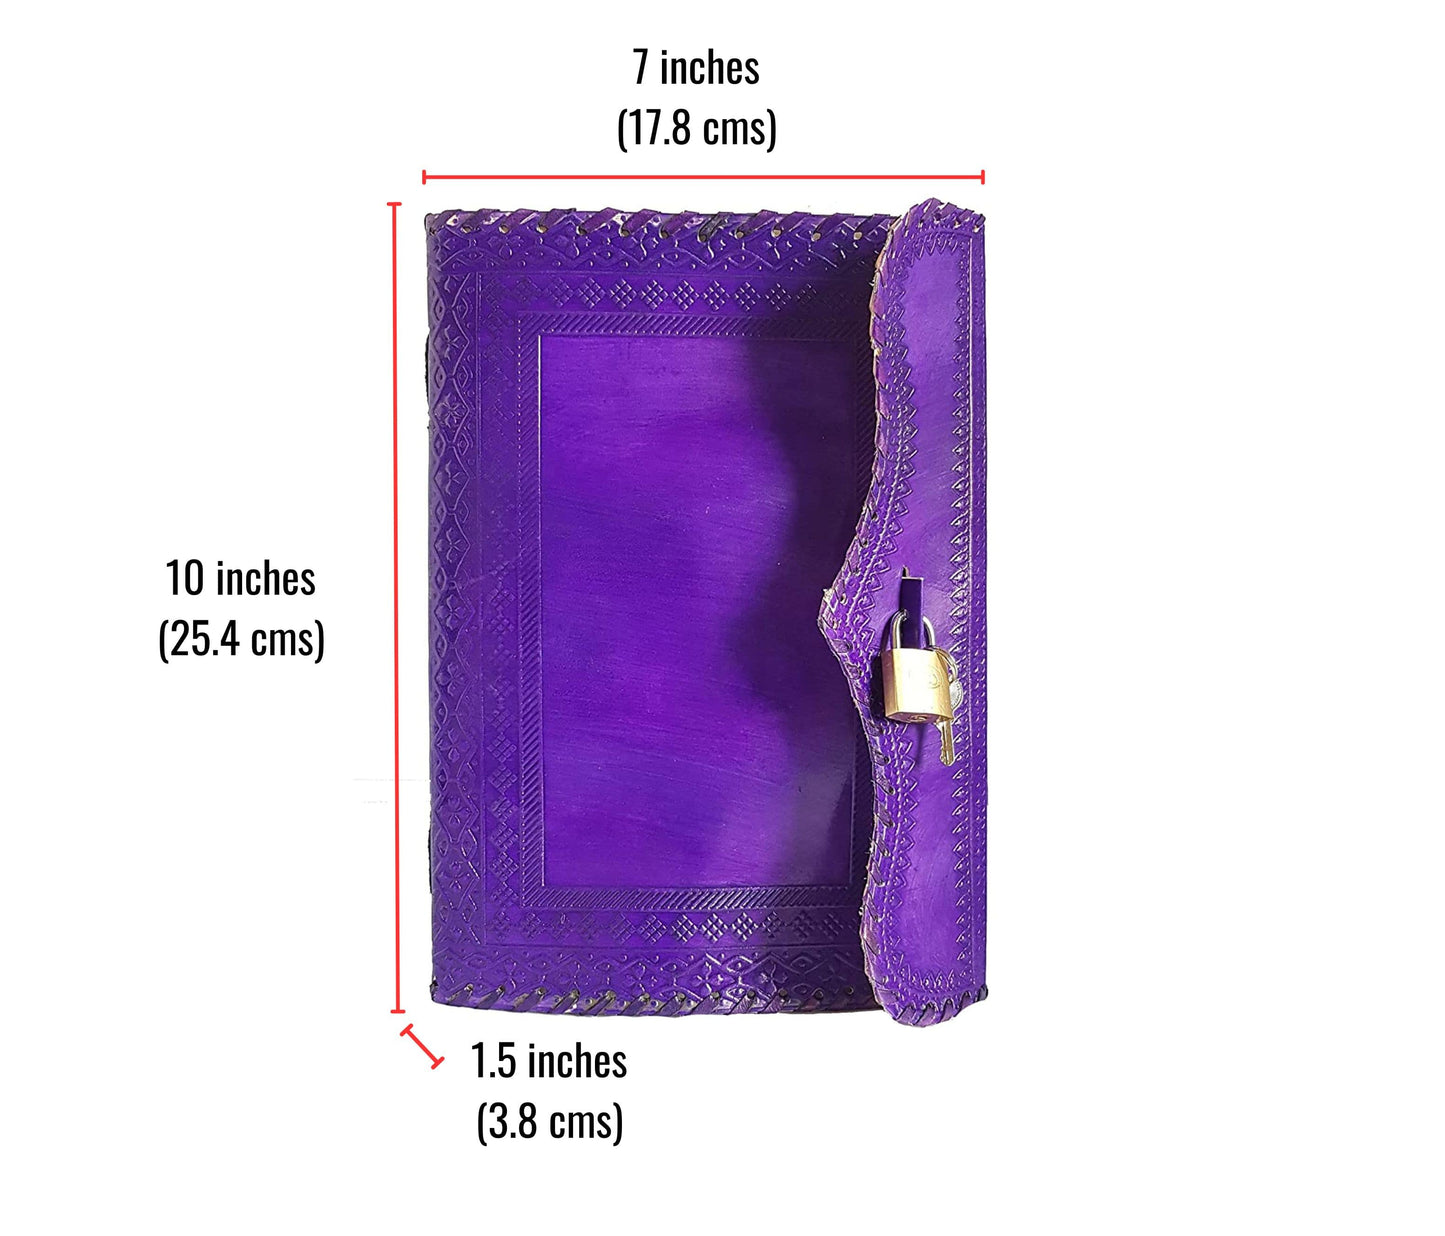 Handmade Vintage Purple Leather Journal with Lock